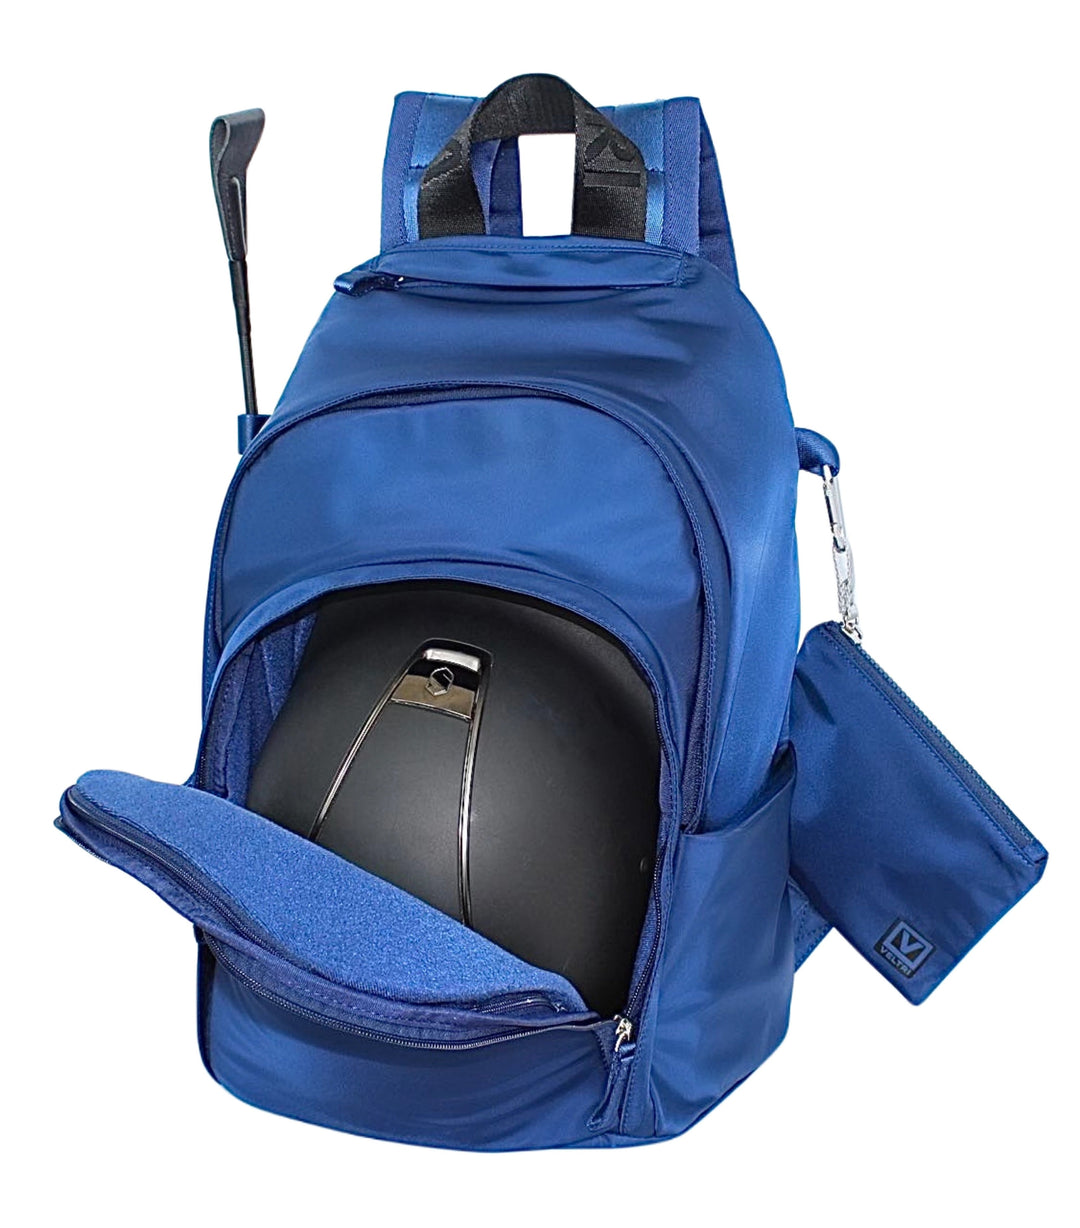 Veltri Sport Delaire Backpack - Bright Navy